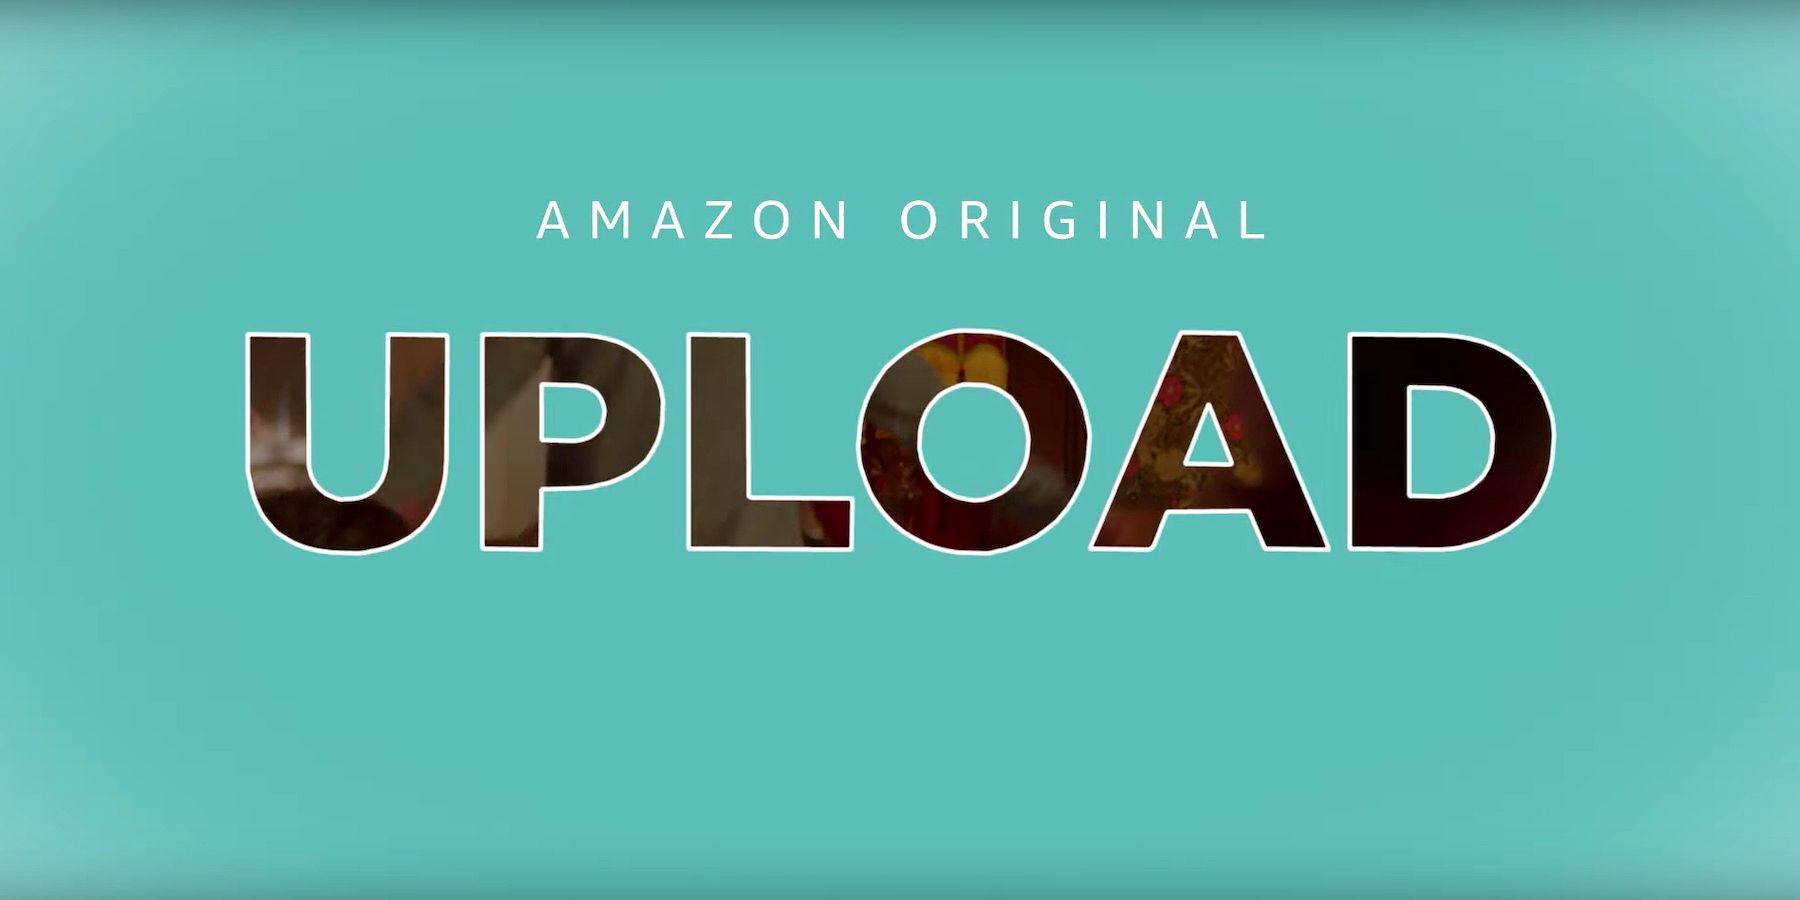 Amazon Original. Prime show logo. Upload only